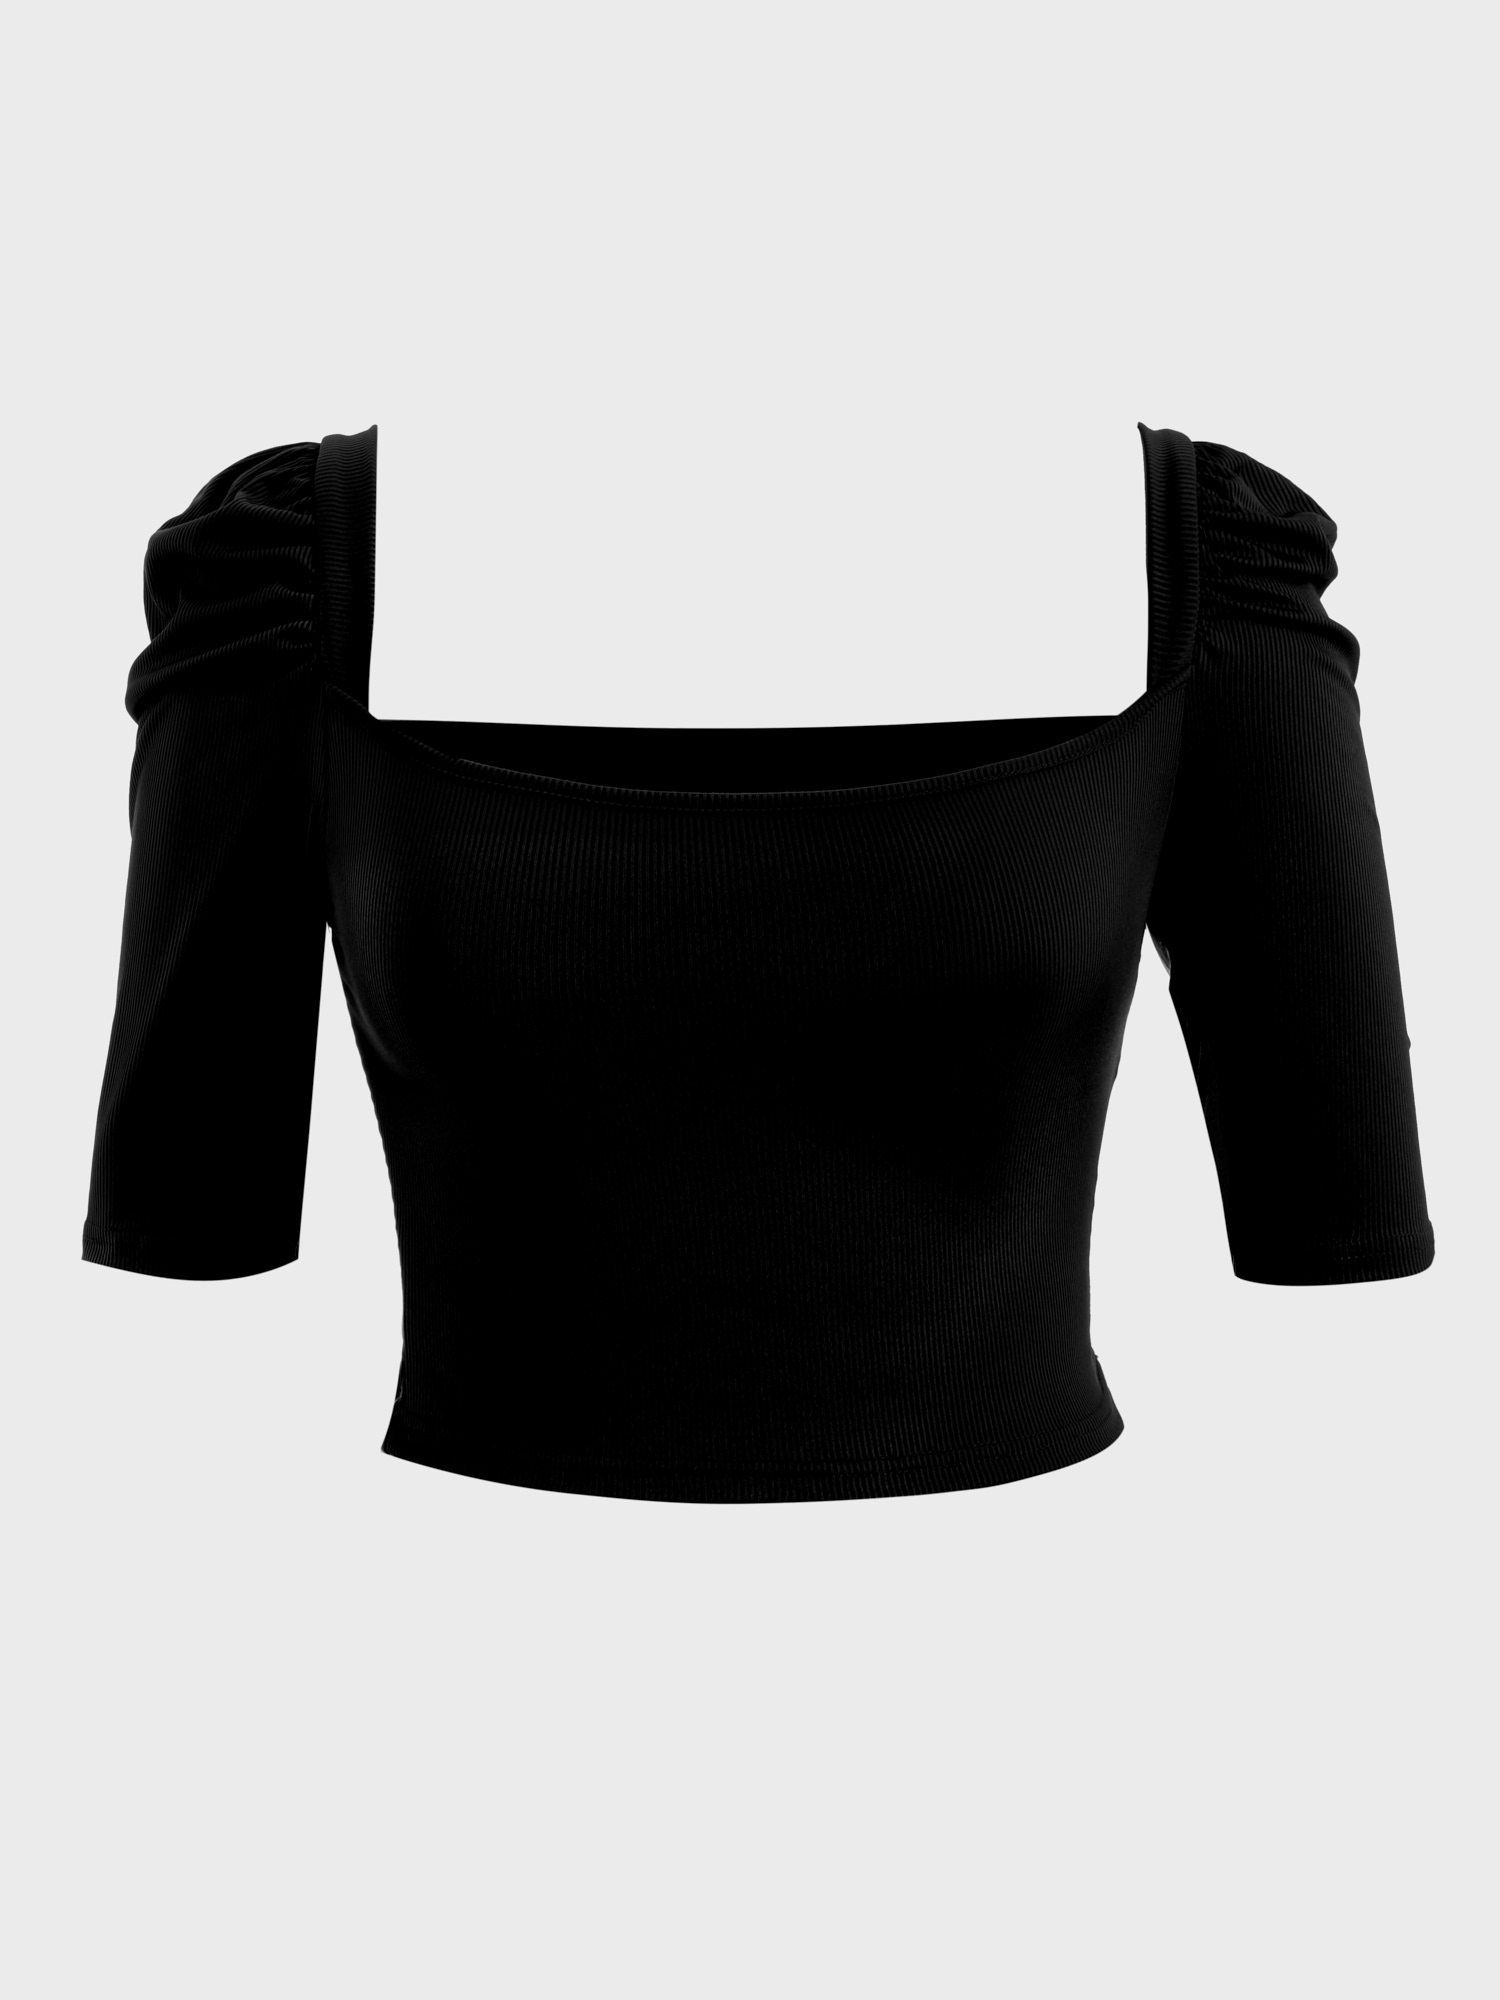 Midsize Cute Puff Square Neck Crop Top Black | Hemwave - Midsize Fashion